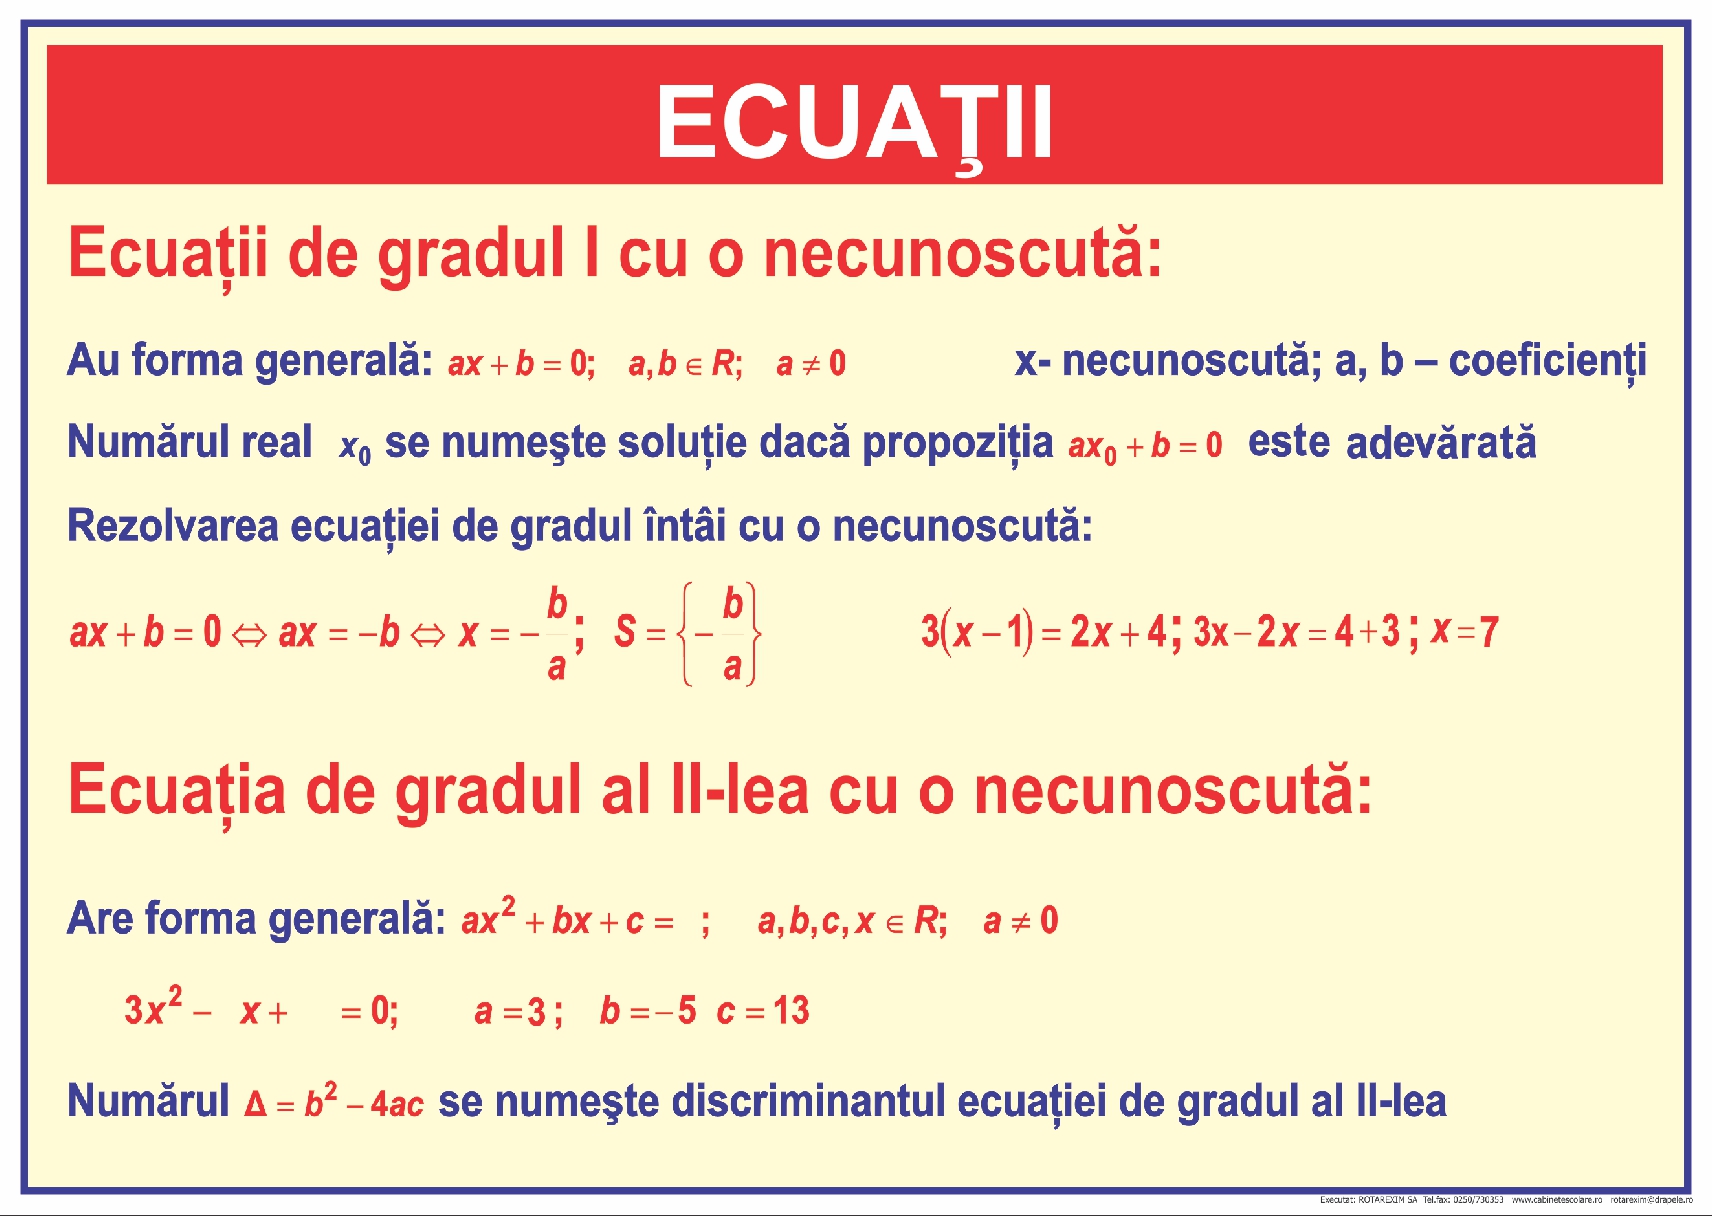 Ecuații.